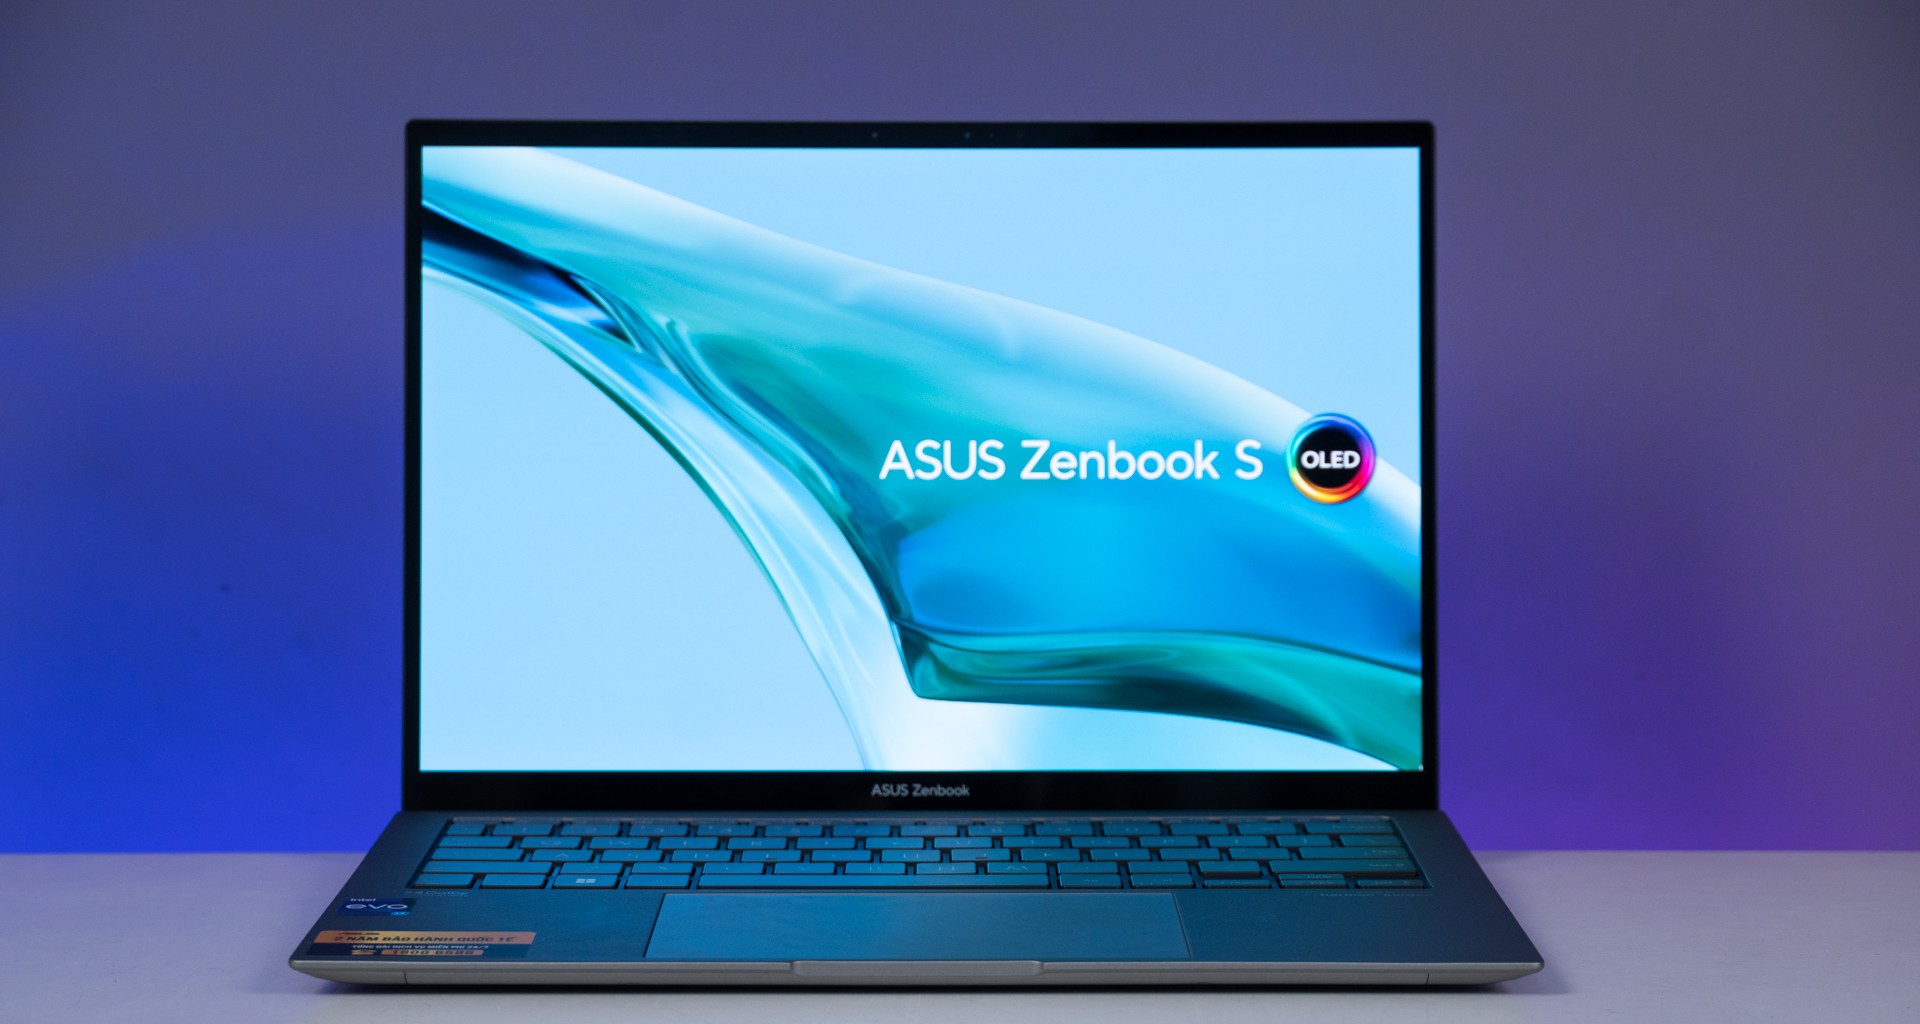 Asus Zenbook S13 OLED UX5304